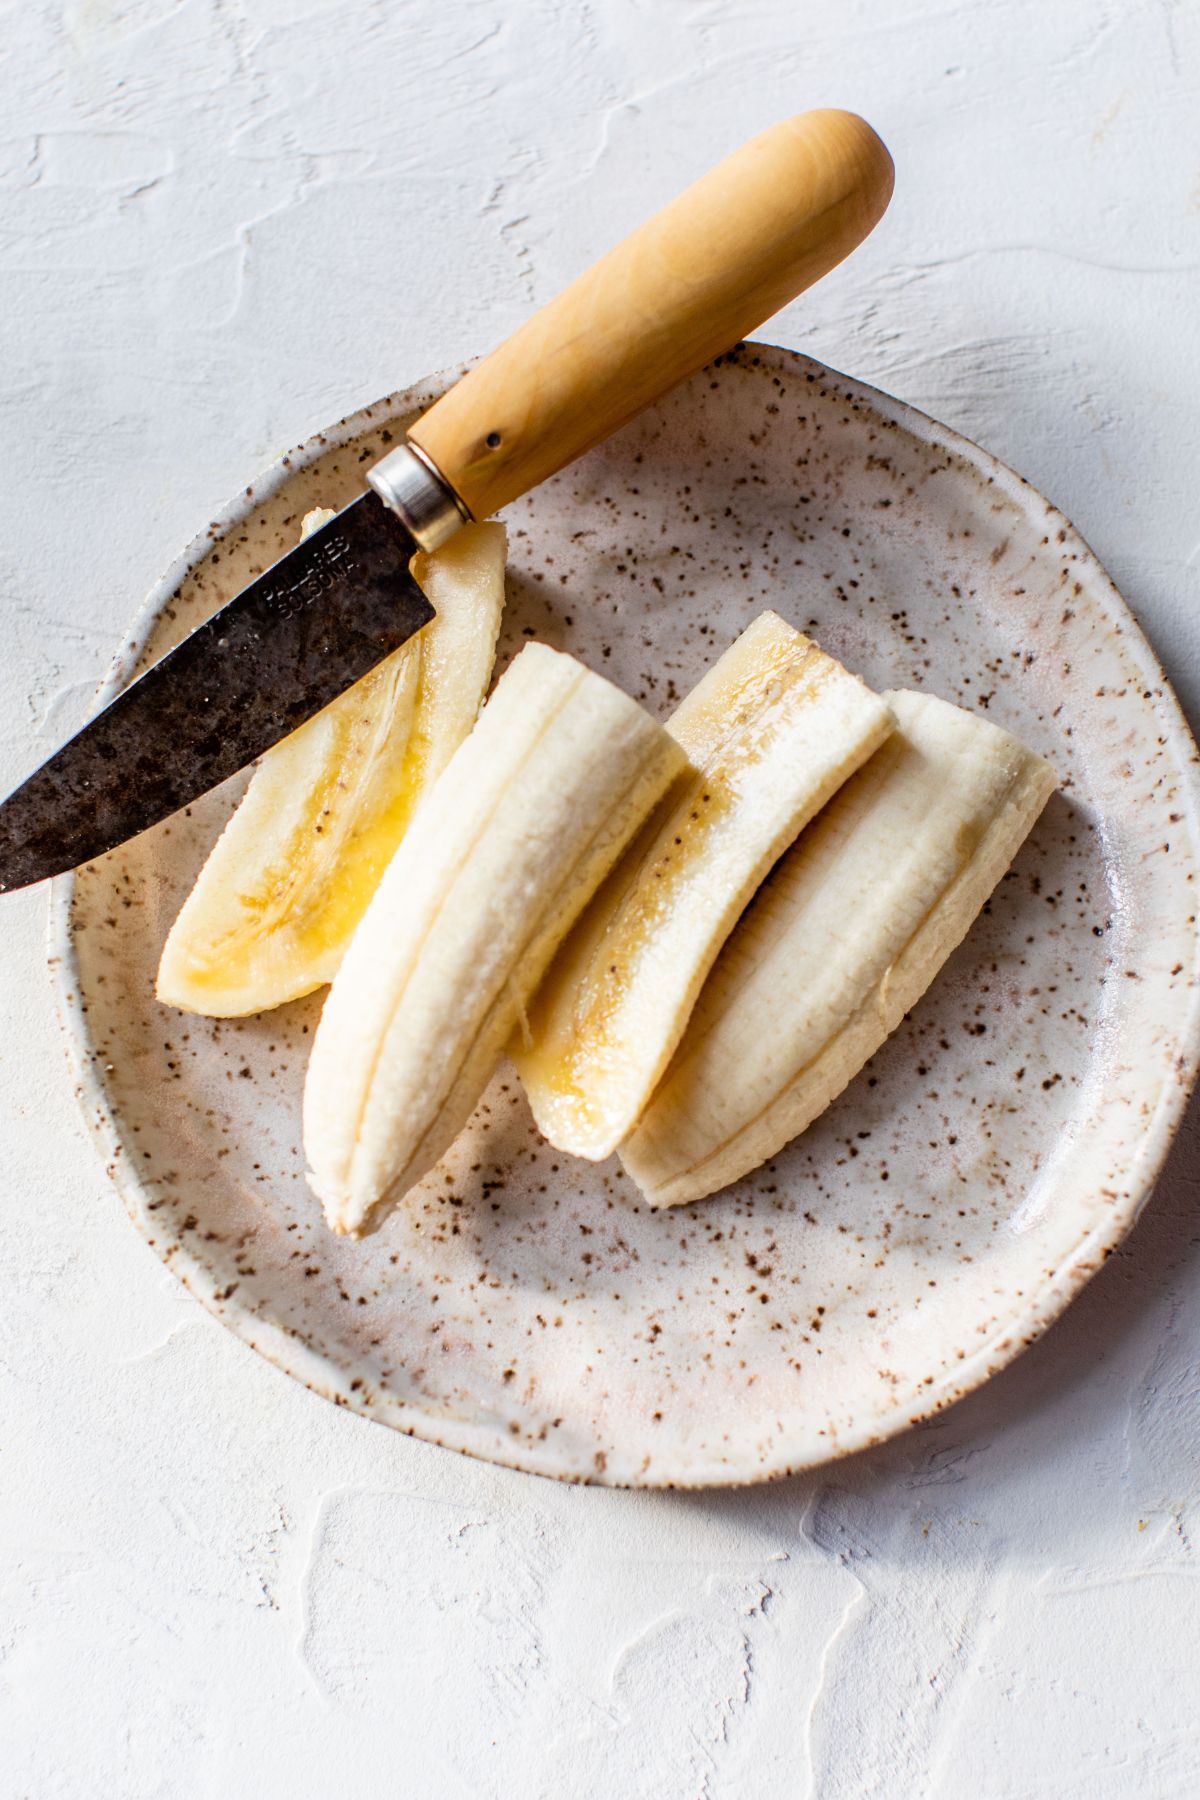 Bananas sliced on a plate.